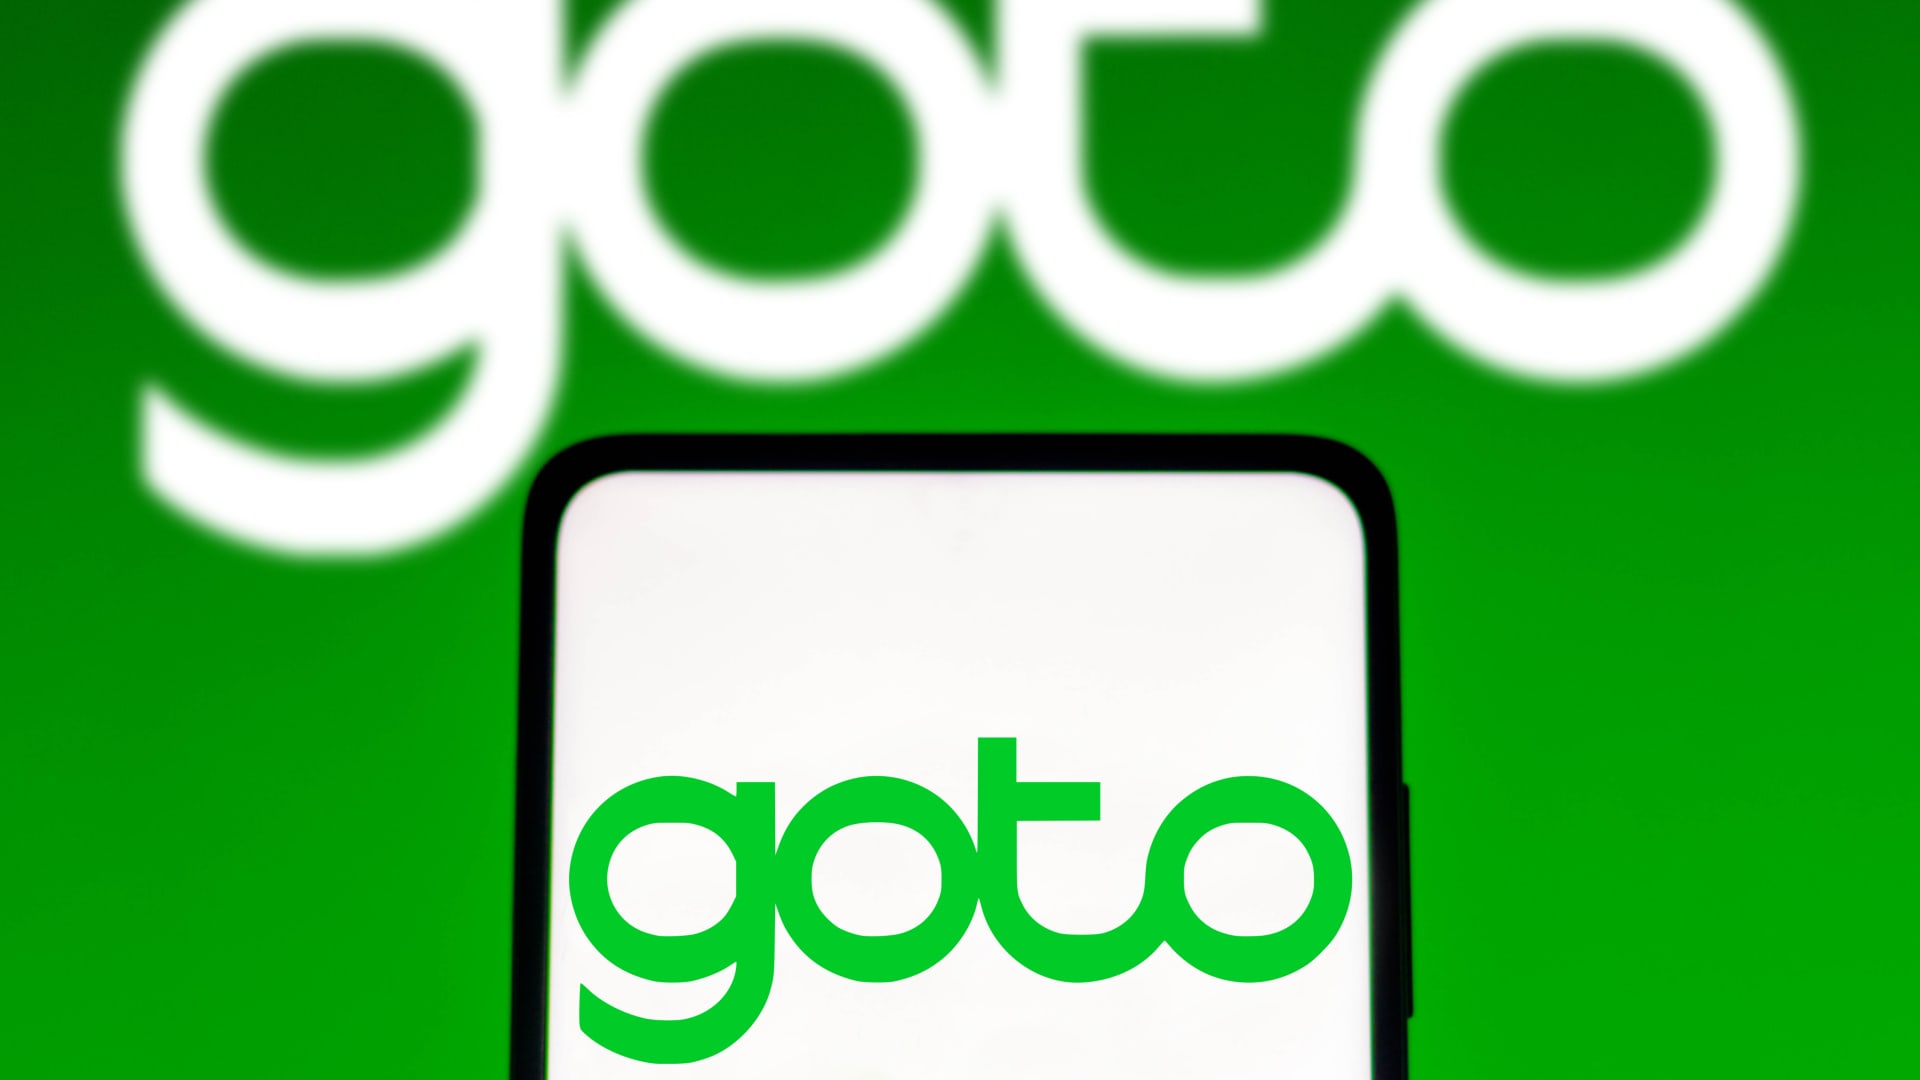 GoT memangkas pengeluaran untuk 1.300 orang – 12% dari jumlah karyawan raksasa teknologi Indonesia